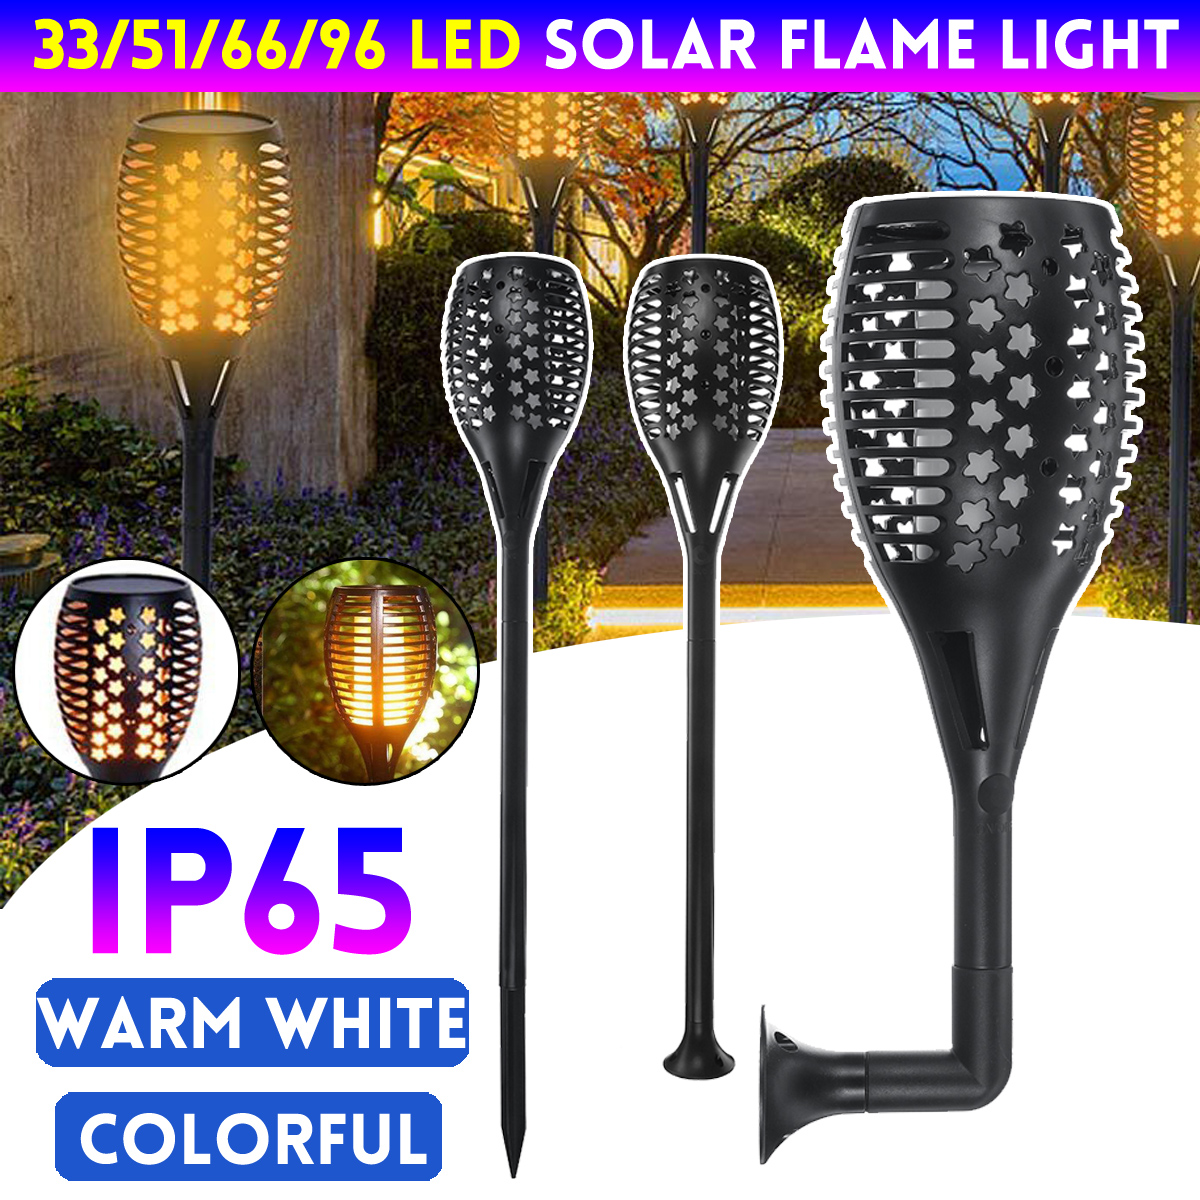 33516696-LED-Solar-Torch-Dance-Flickering-Flame-Light-Outdoor-Yard-Waterproof-1723591-2